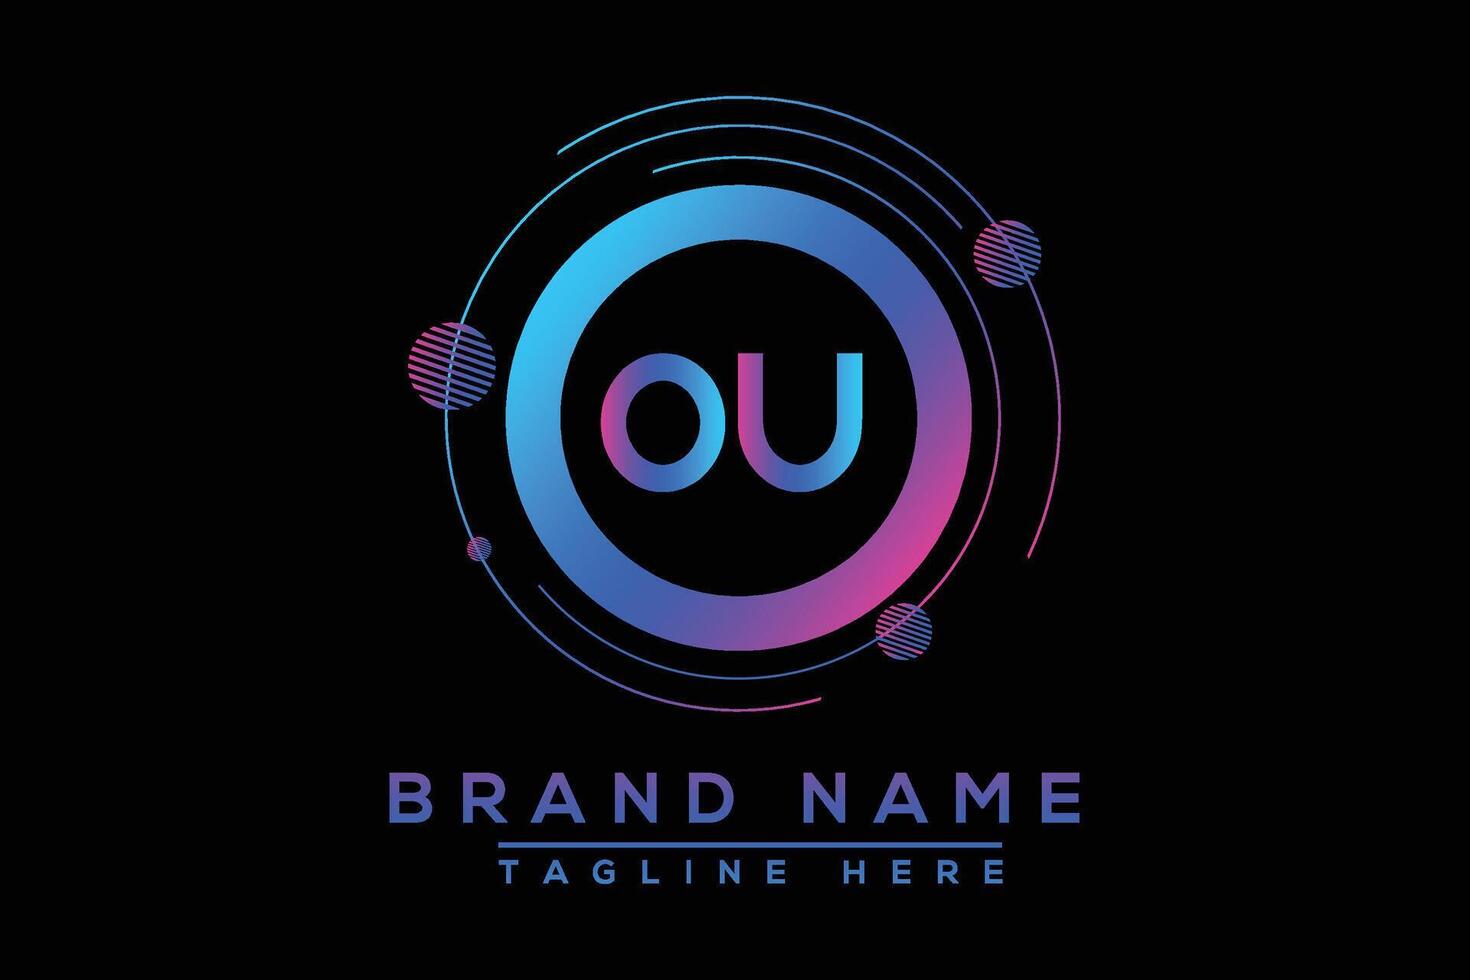 OU letter logo design. Vector logo design for business.